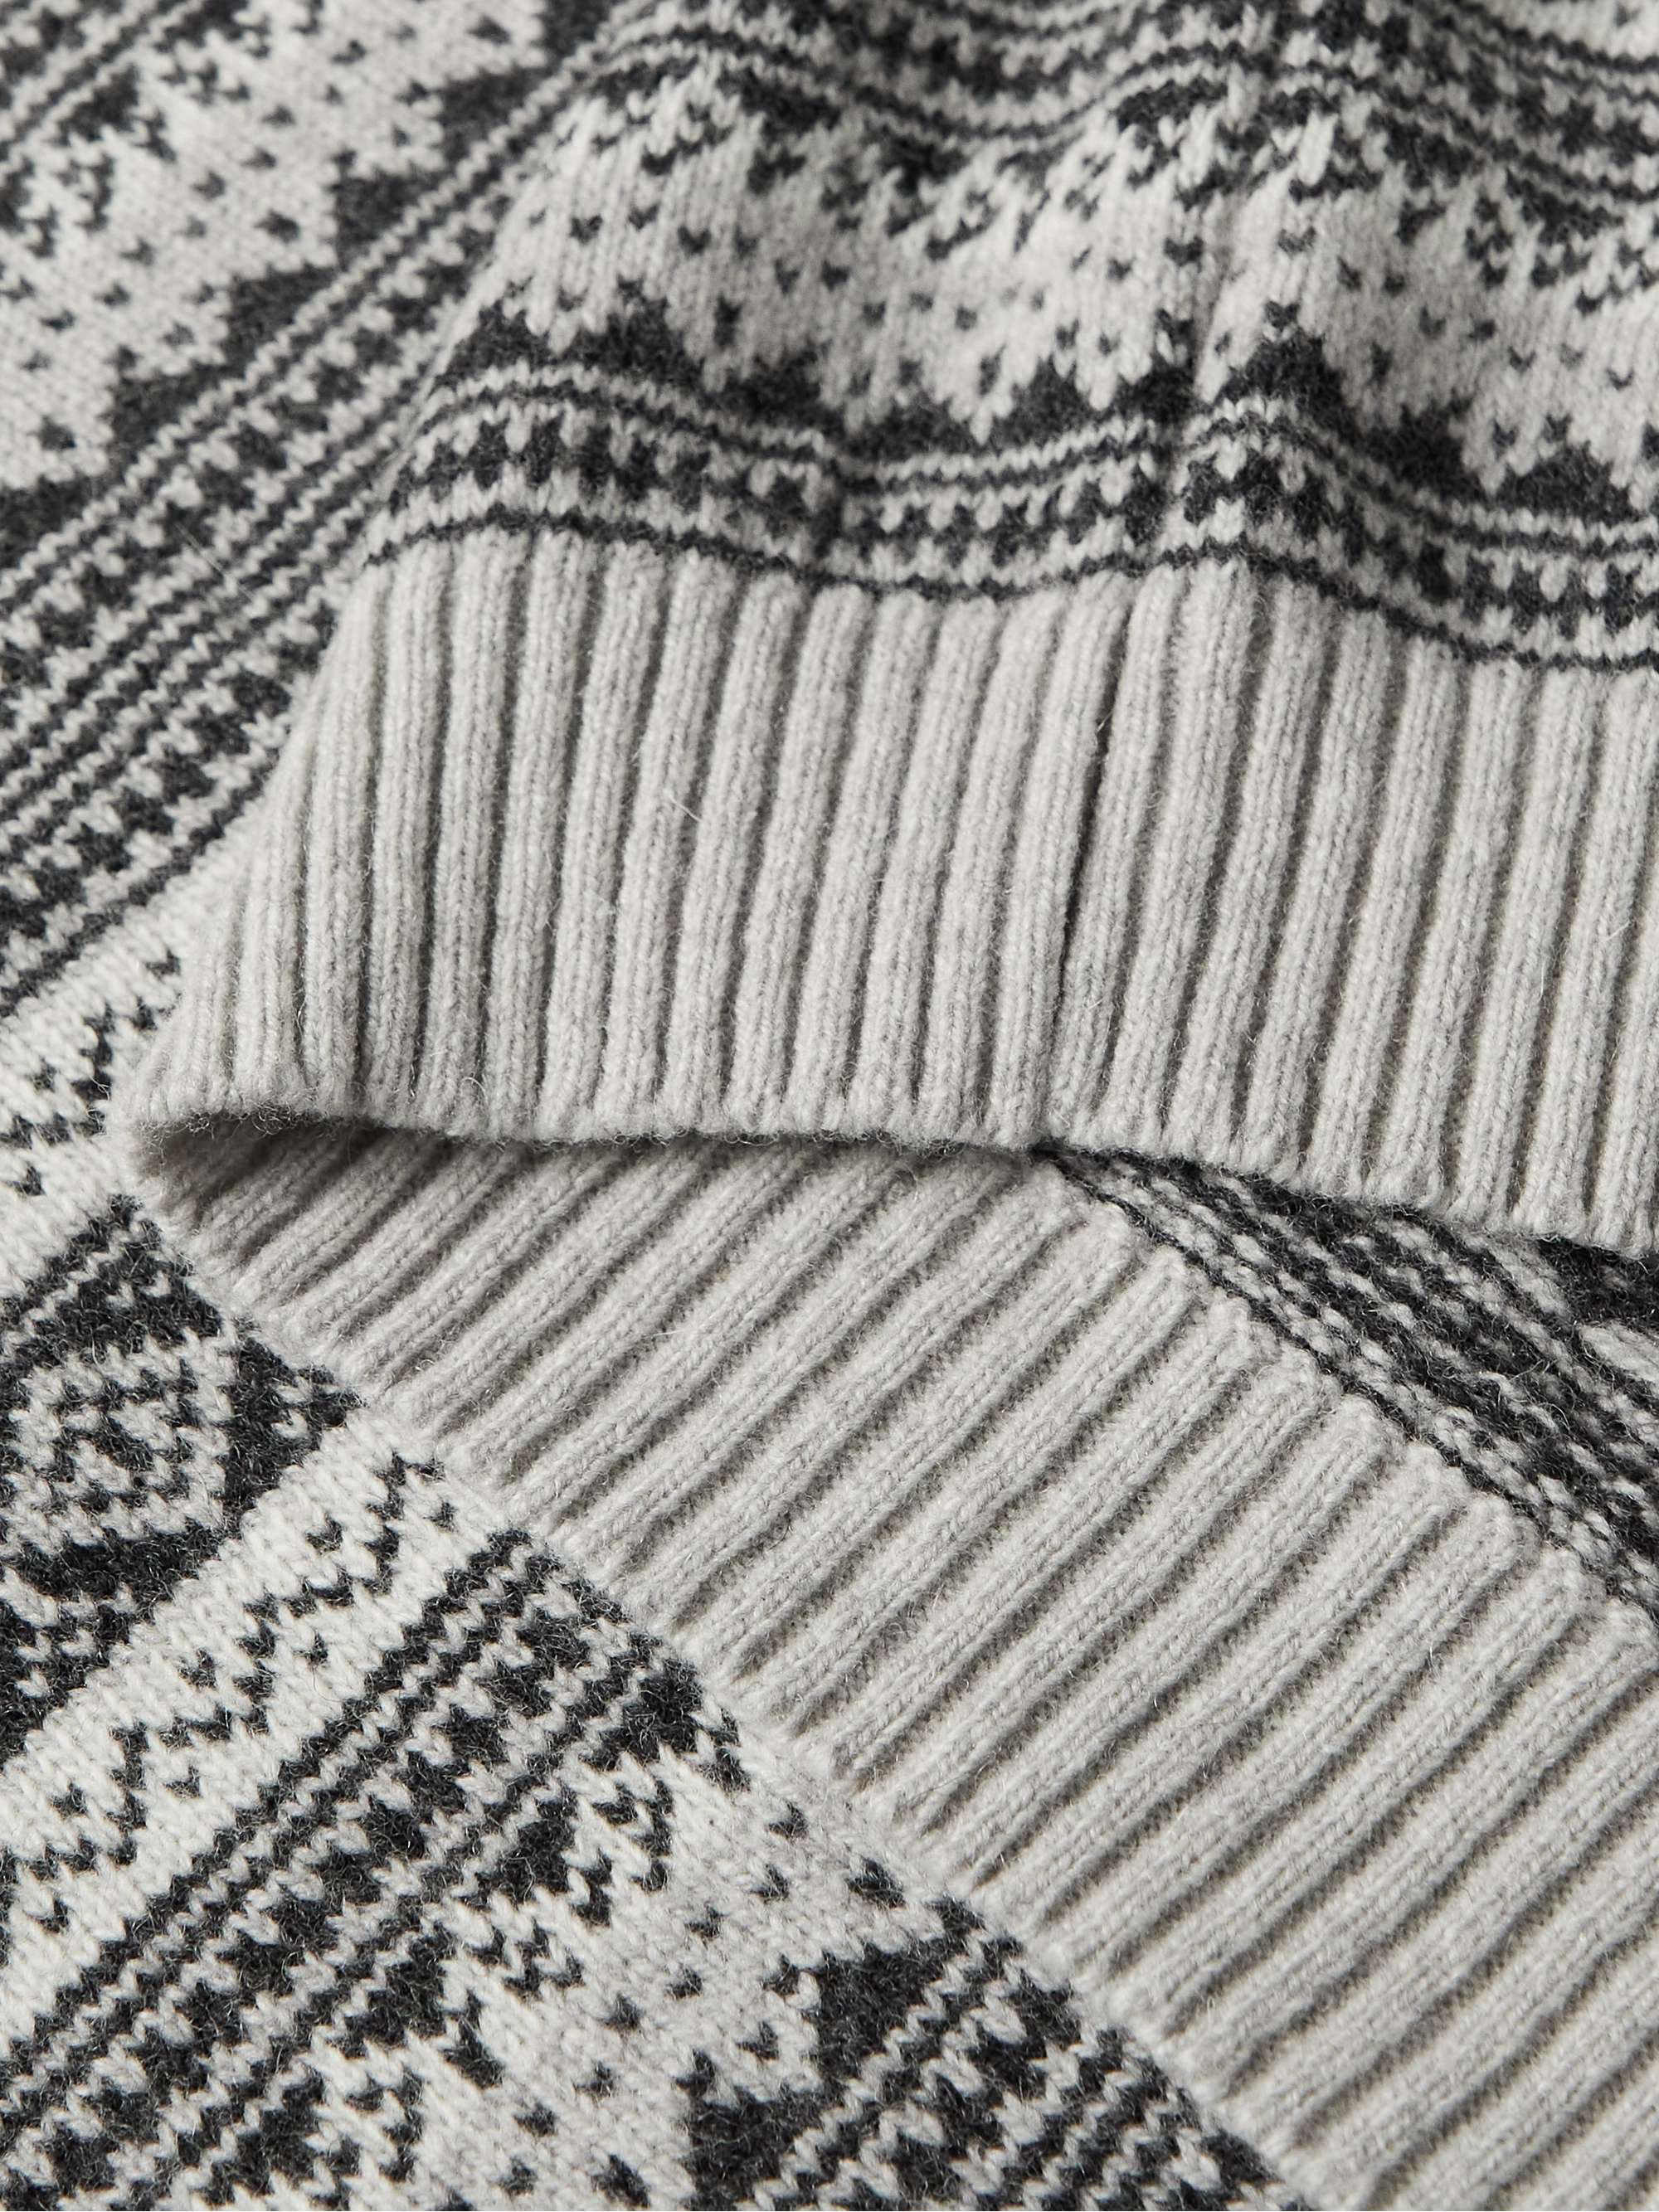 UNIVERSAL WORKS Fair Isle Wool-Blend Sweater